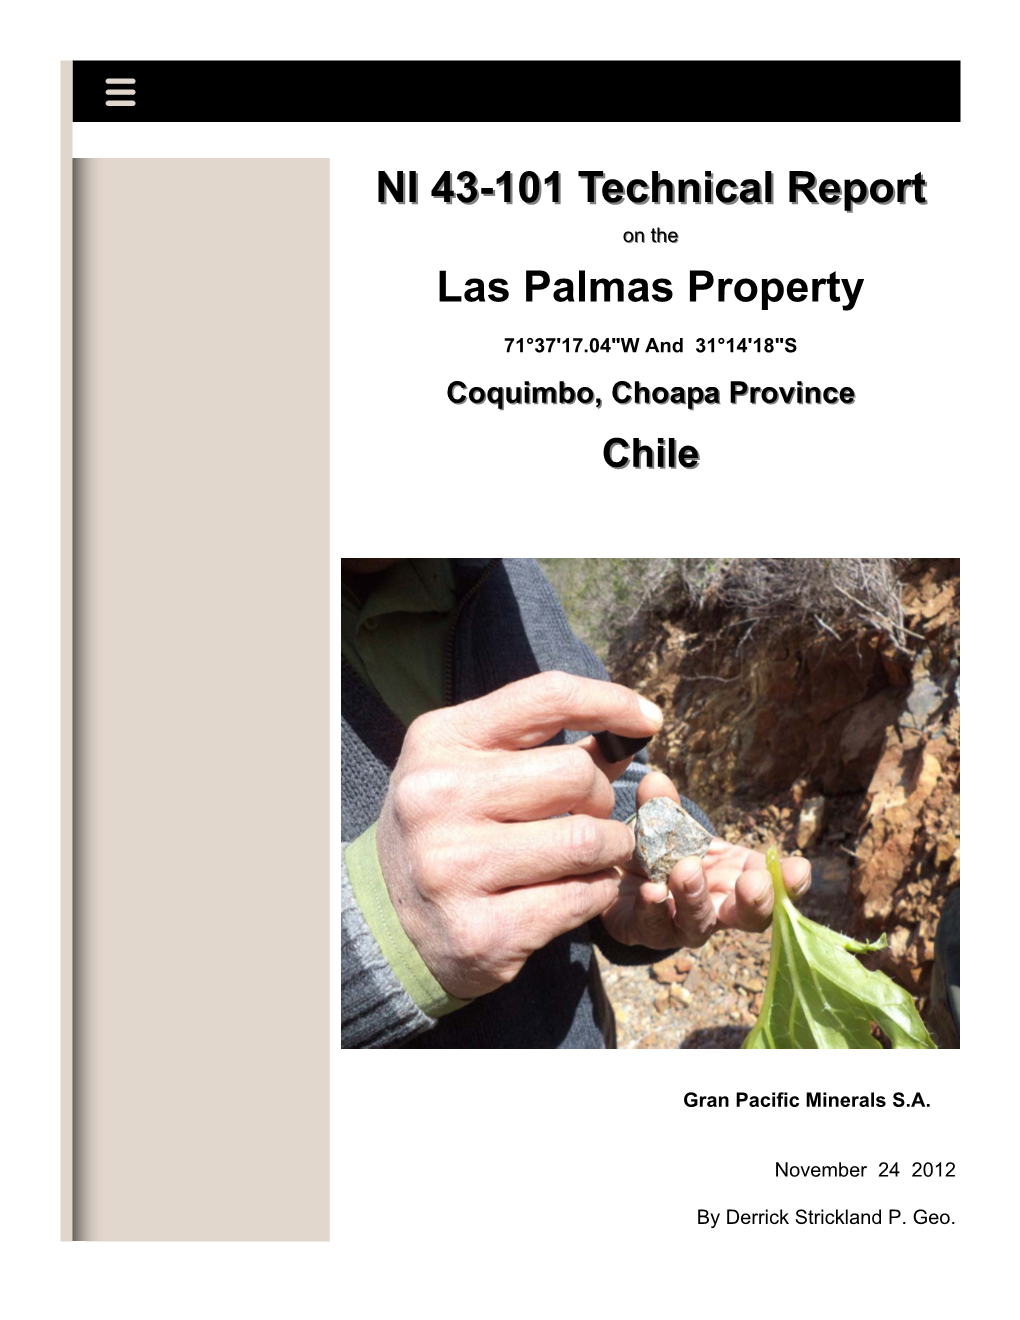 NI 43-101 Technical Report Las Palmas Property